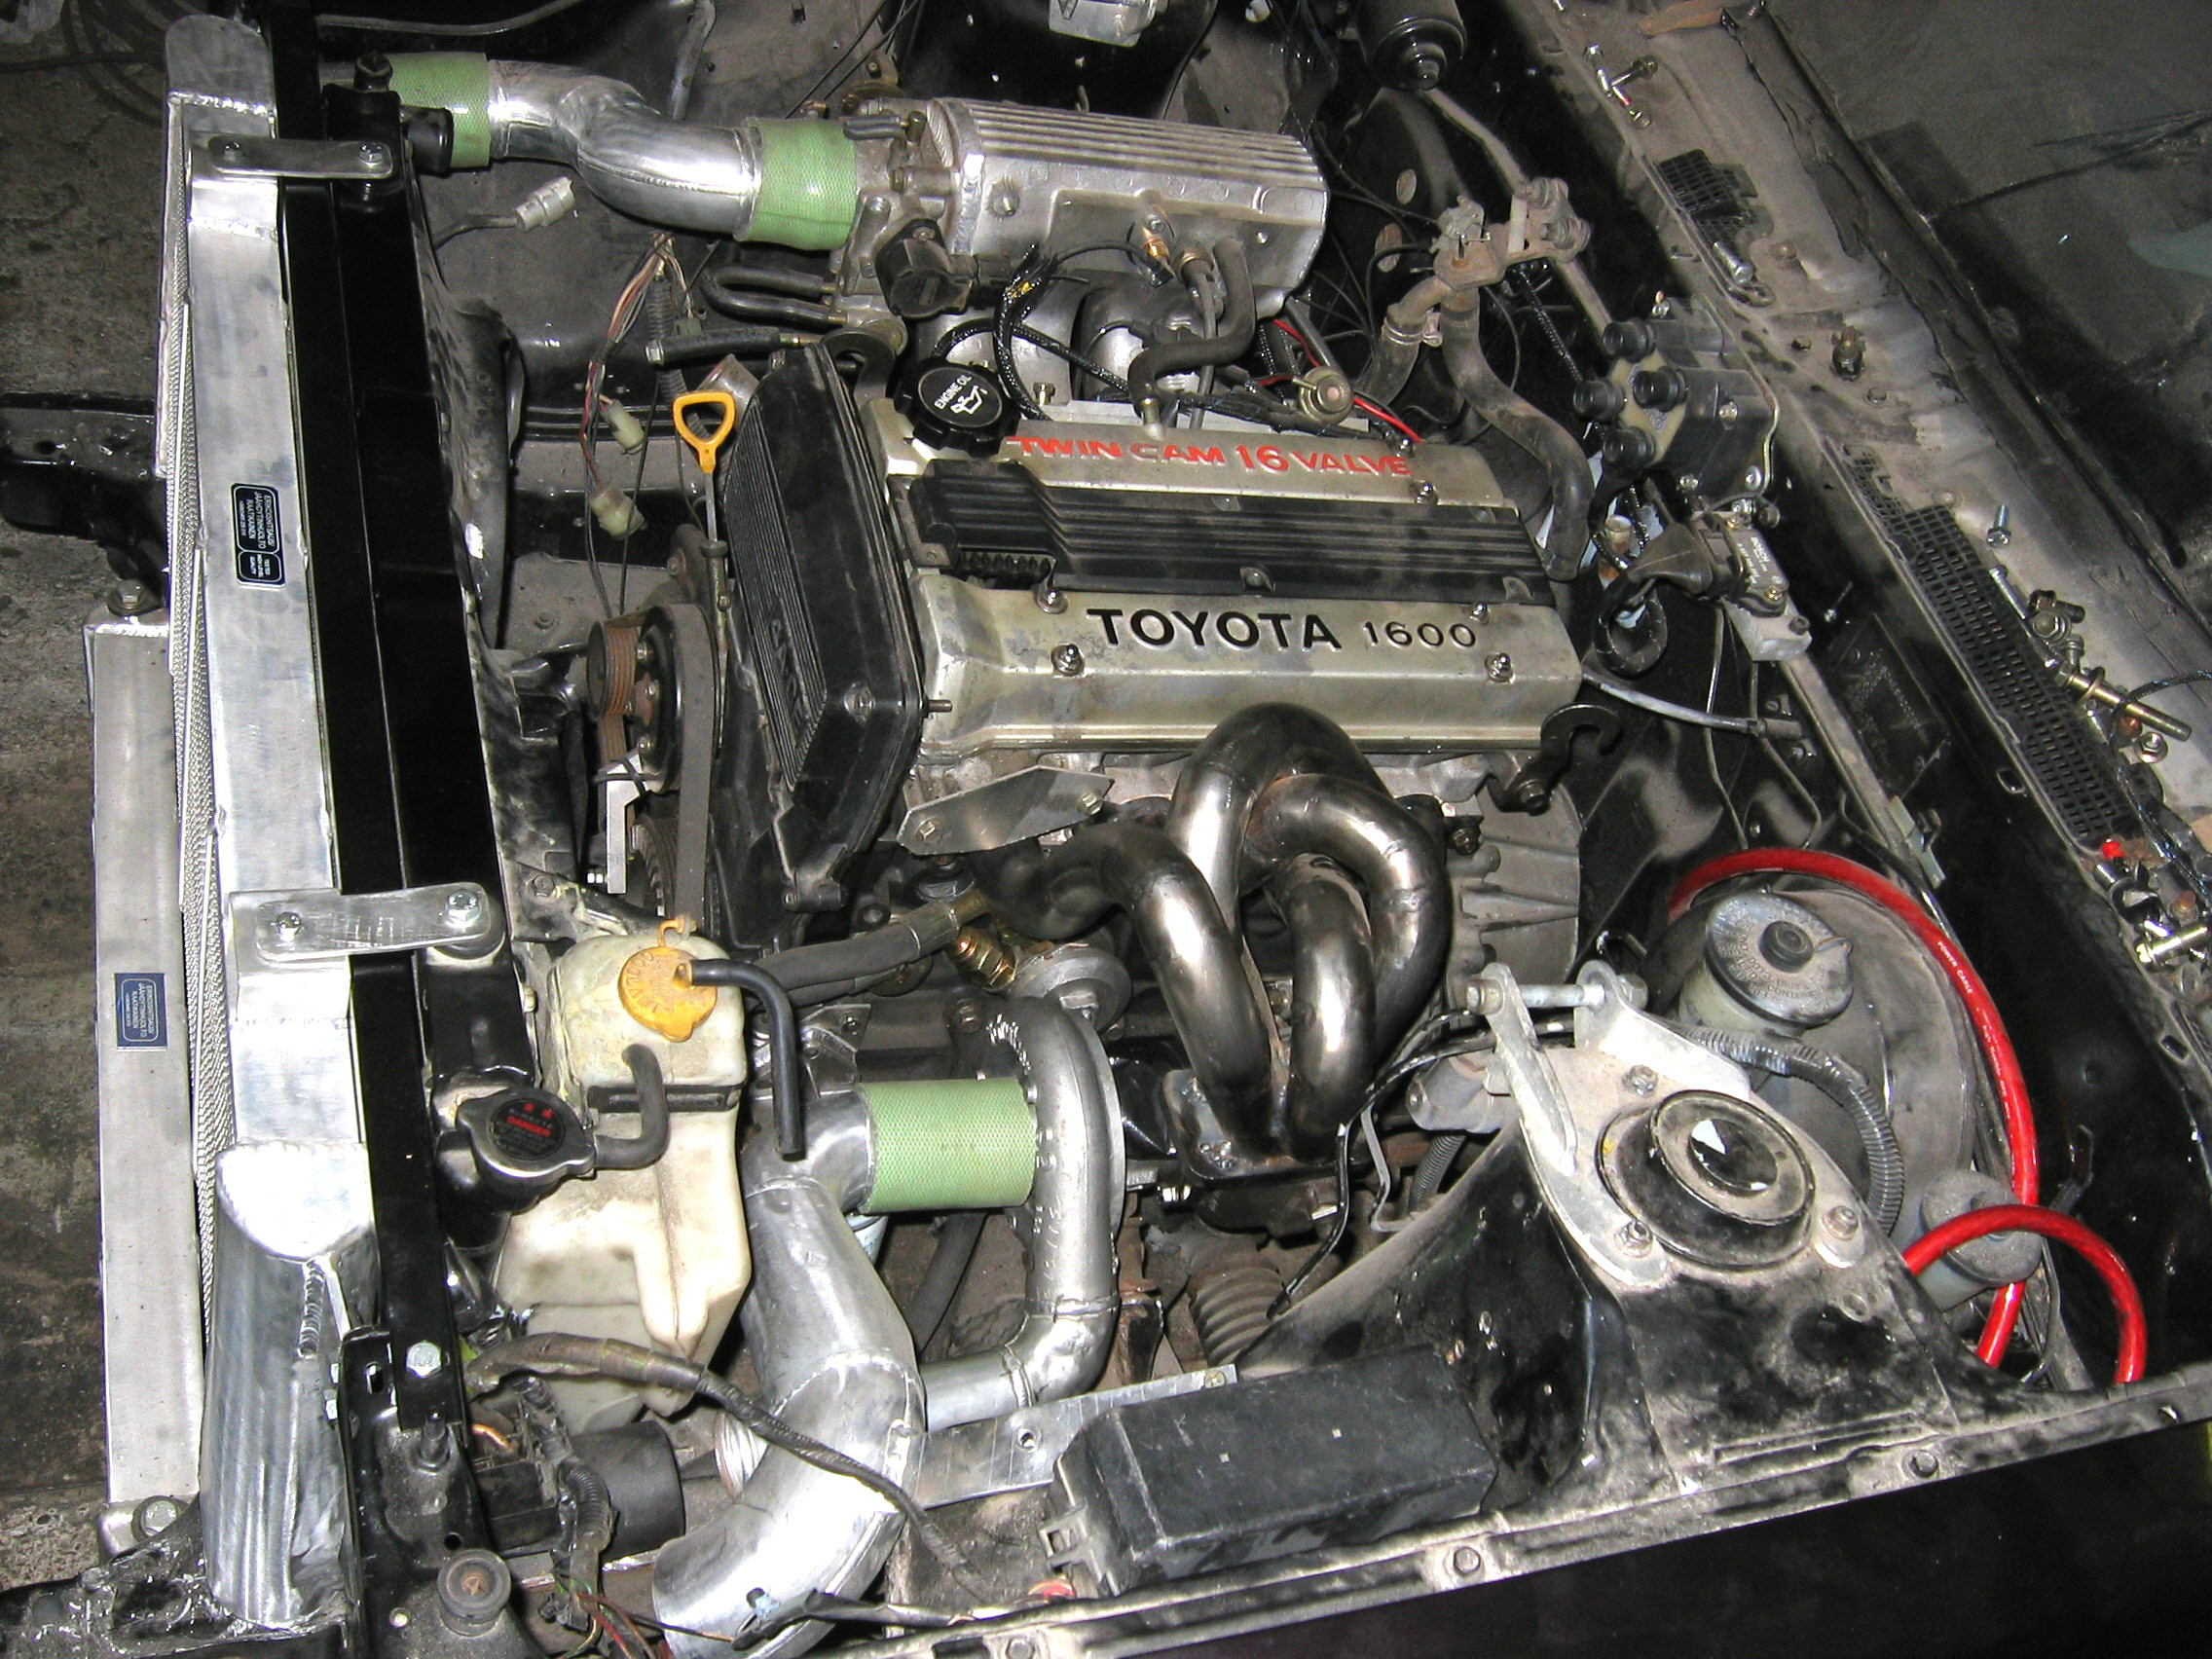 Toyota Corolla GT AE86 Turbo projekti, Moottoritila on myos ahdas